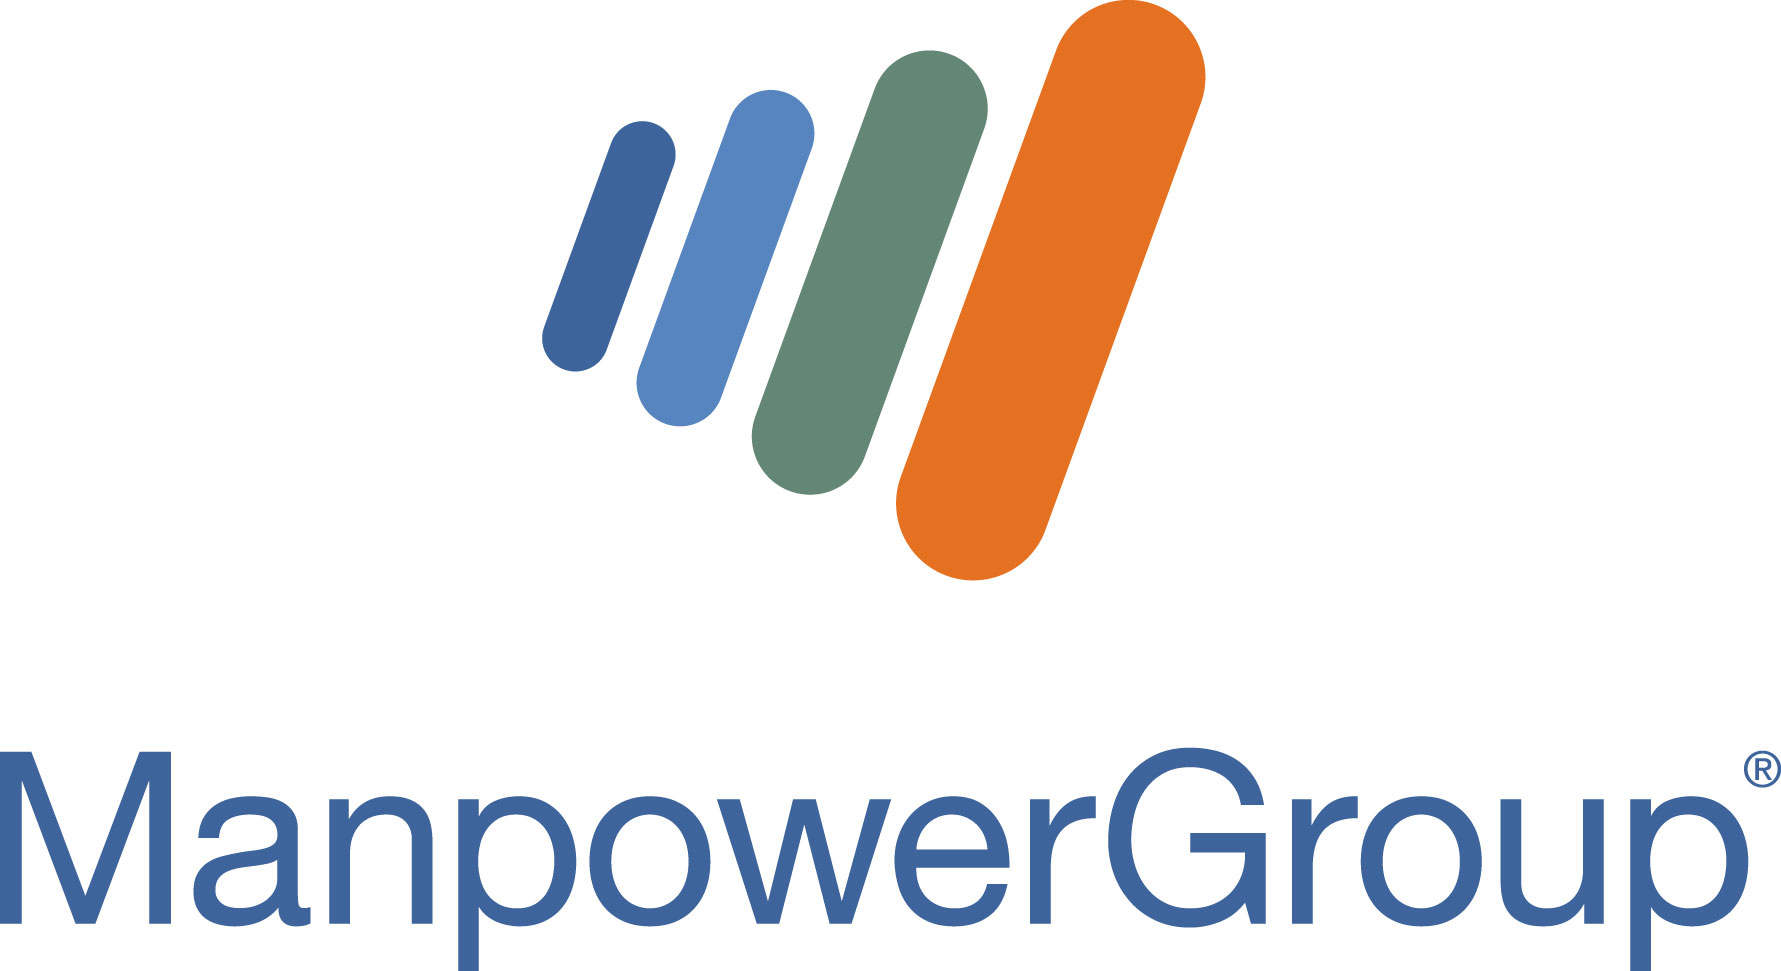 Manpower Group Logo